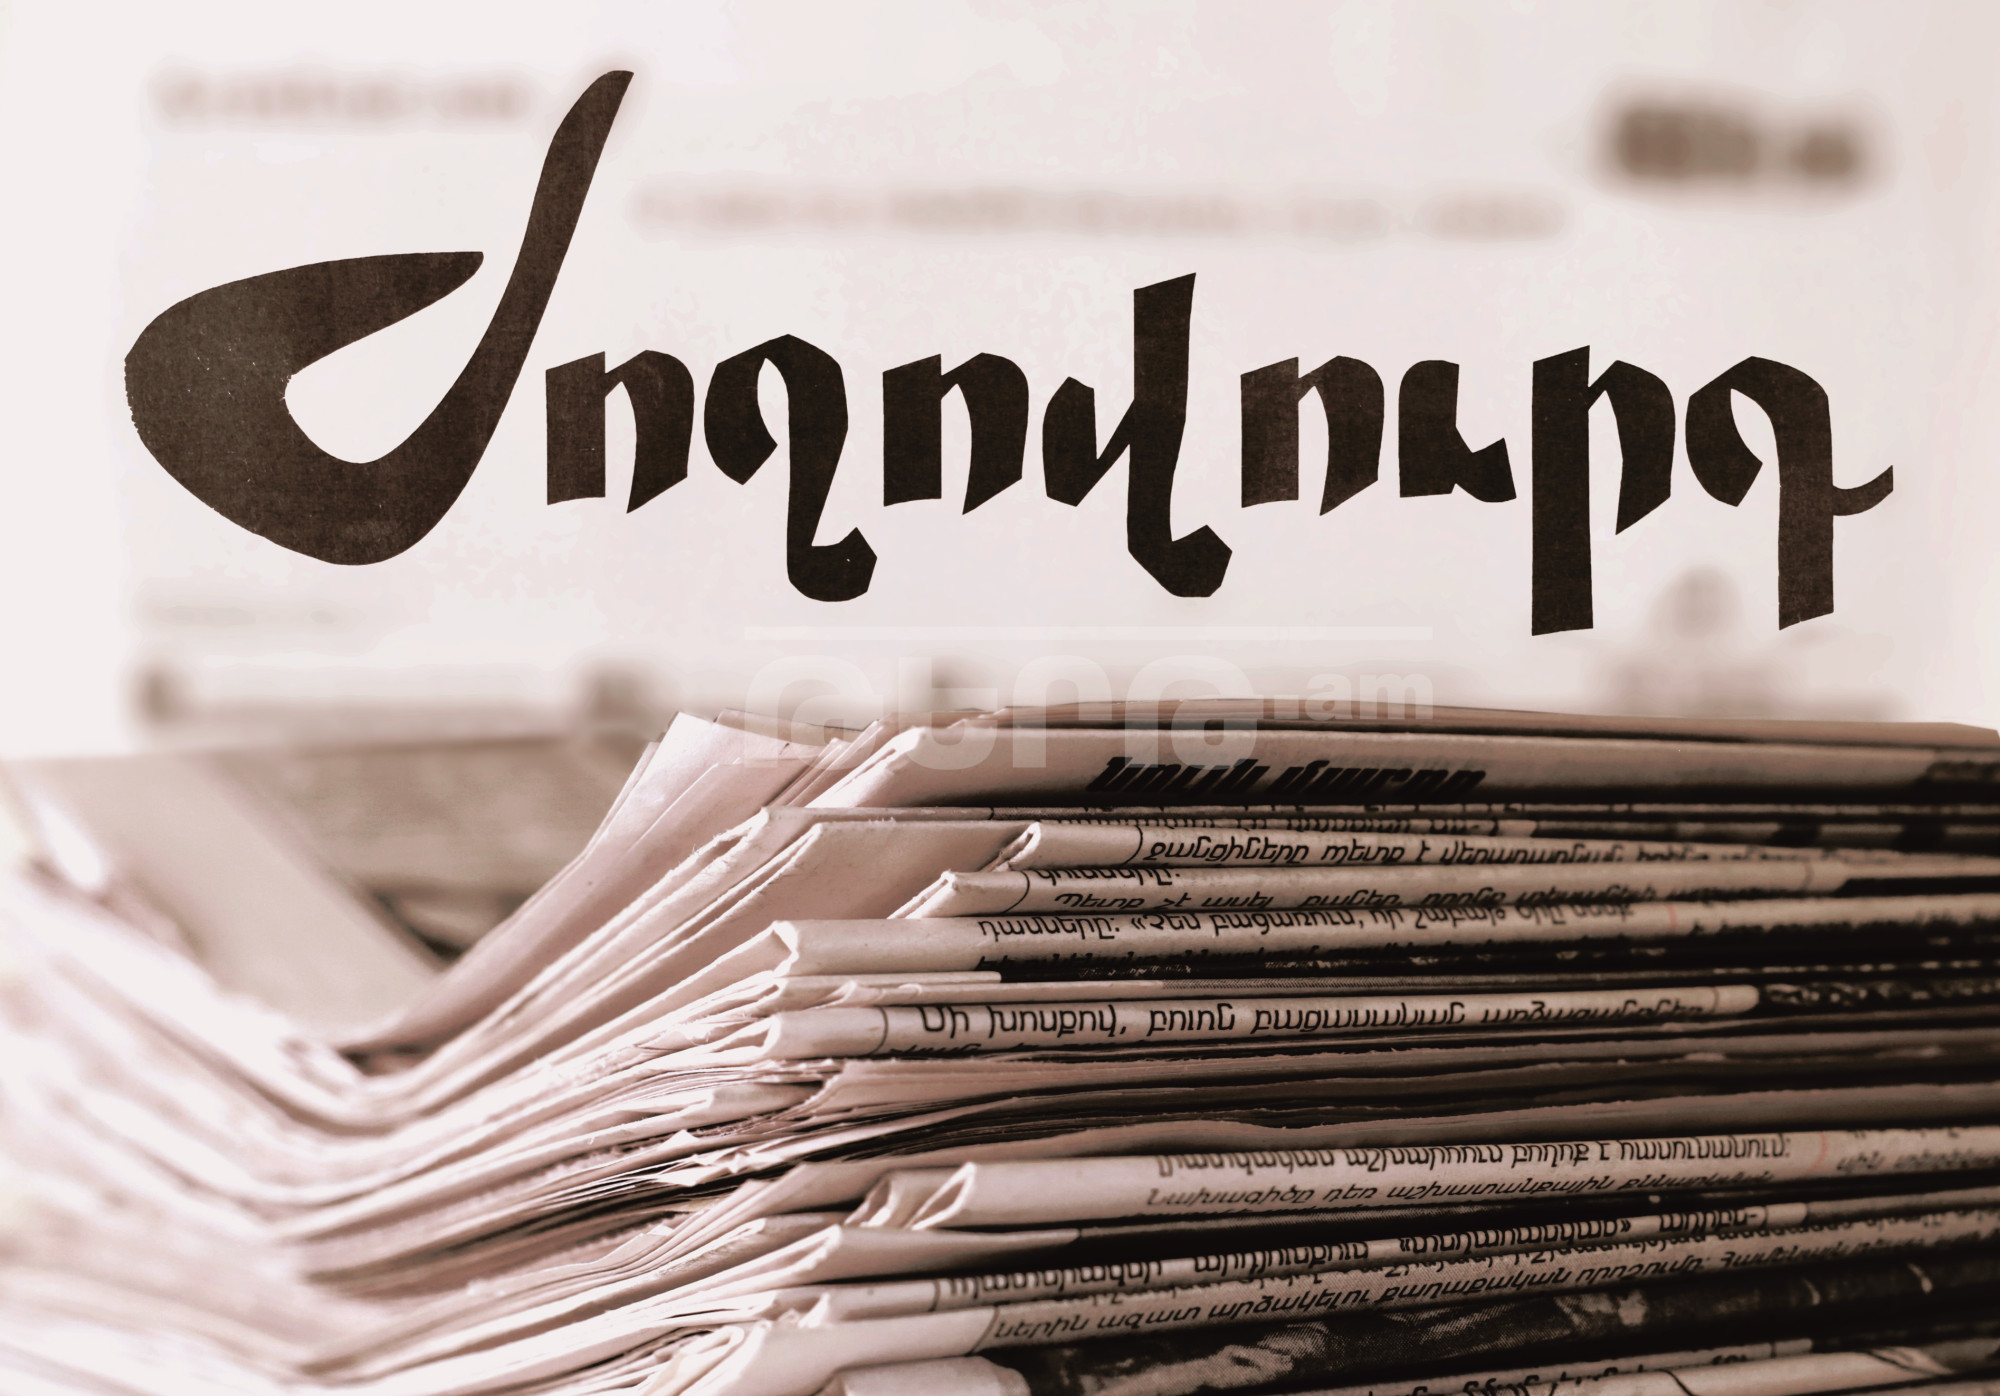 Hari ini, rancangan amandemen konstitusi akan dibahas di Artsakh.  “Zhoghovurd” – Berita dari Armenia